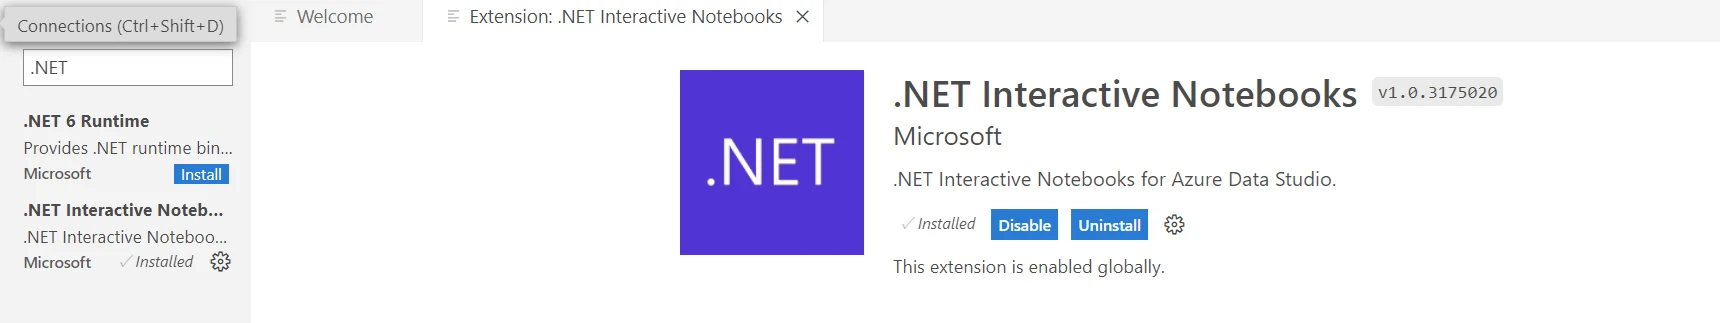 .NET Interactive Notebooks Extension